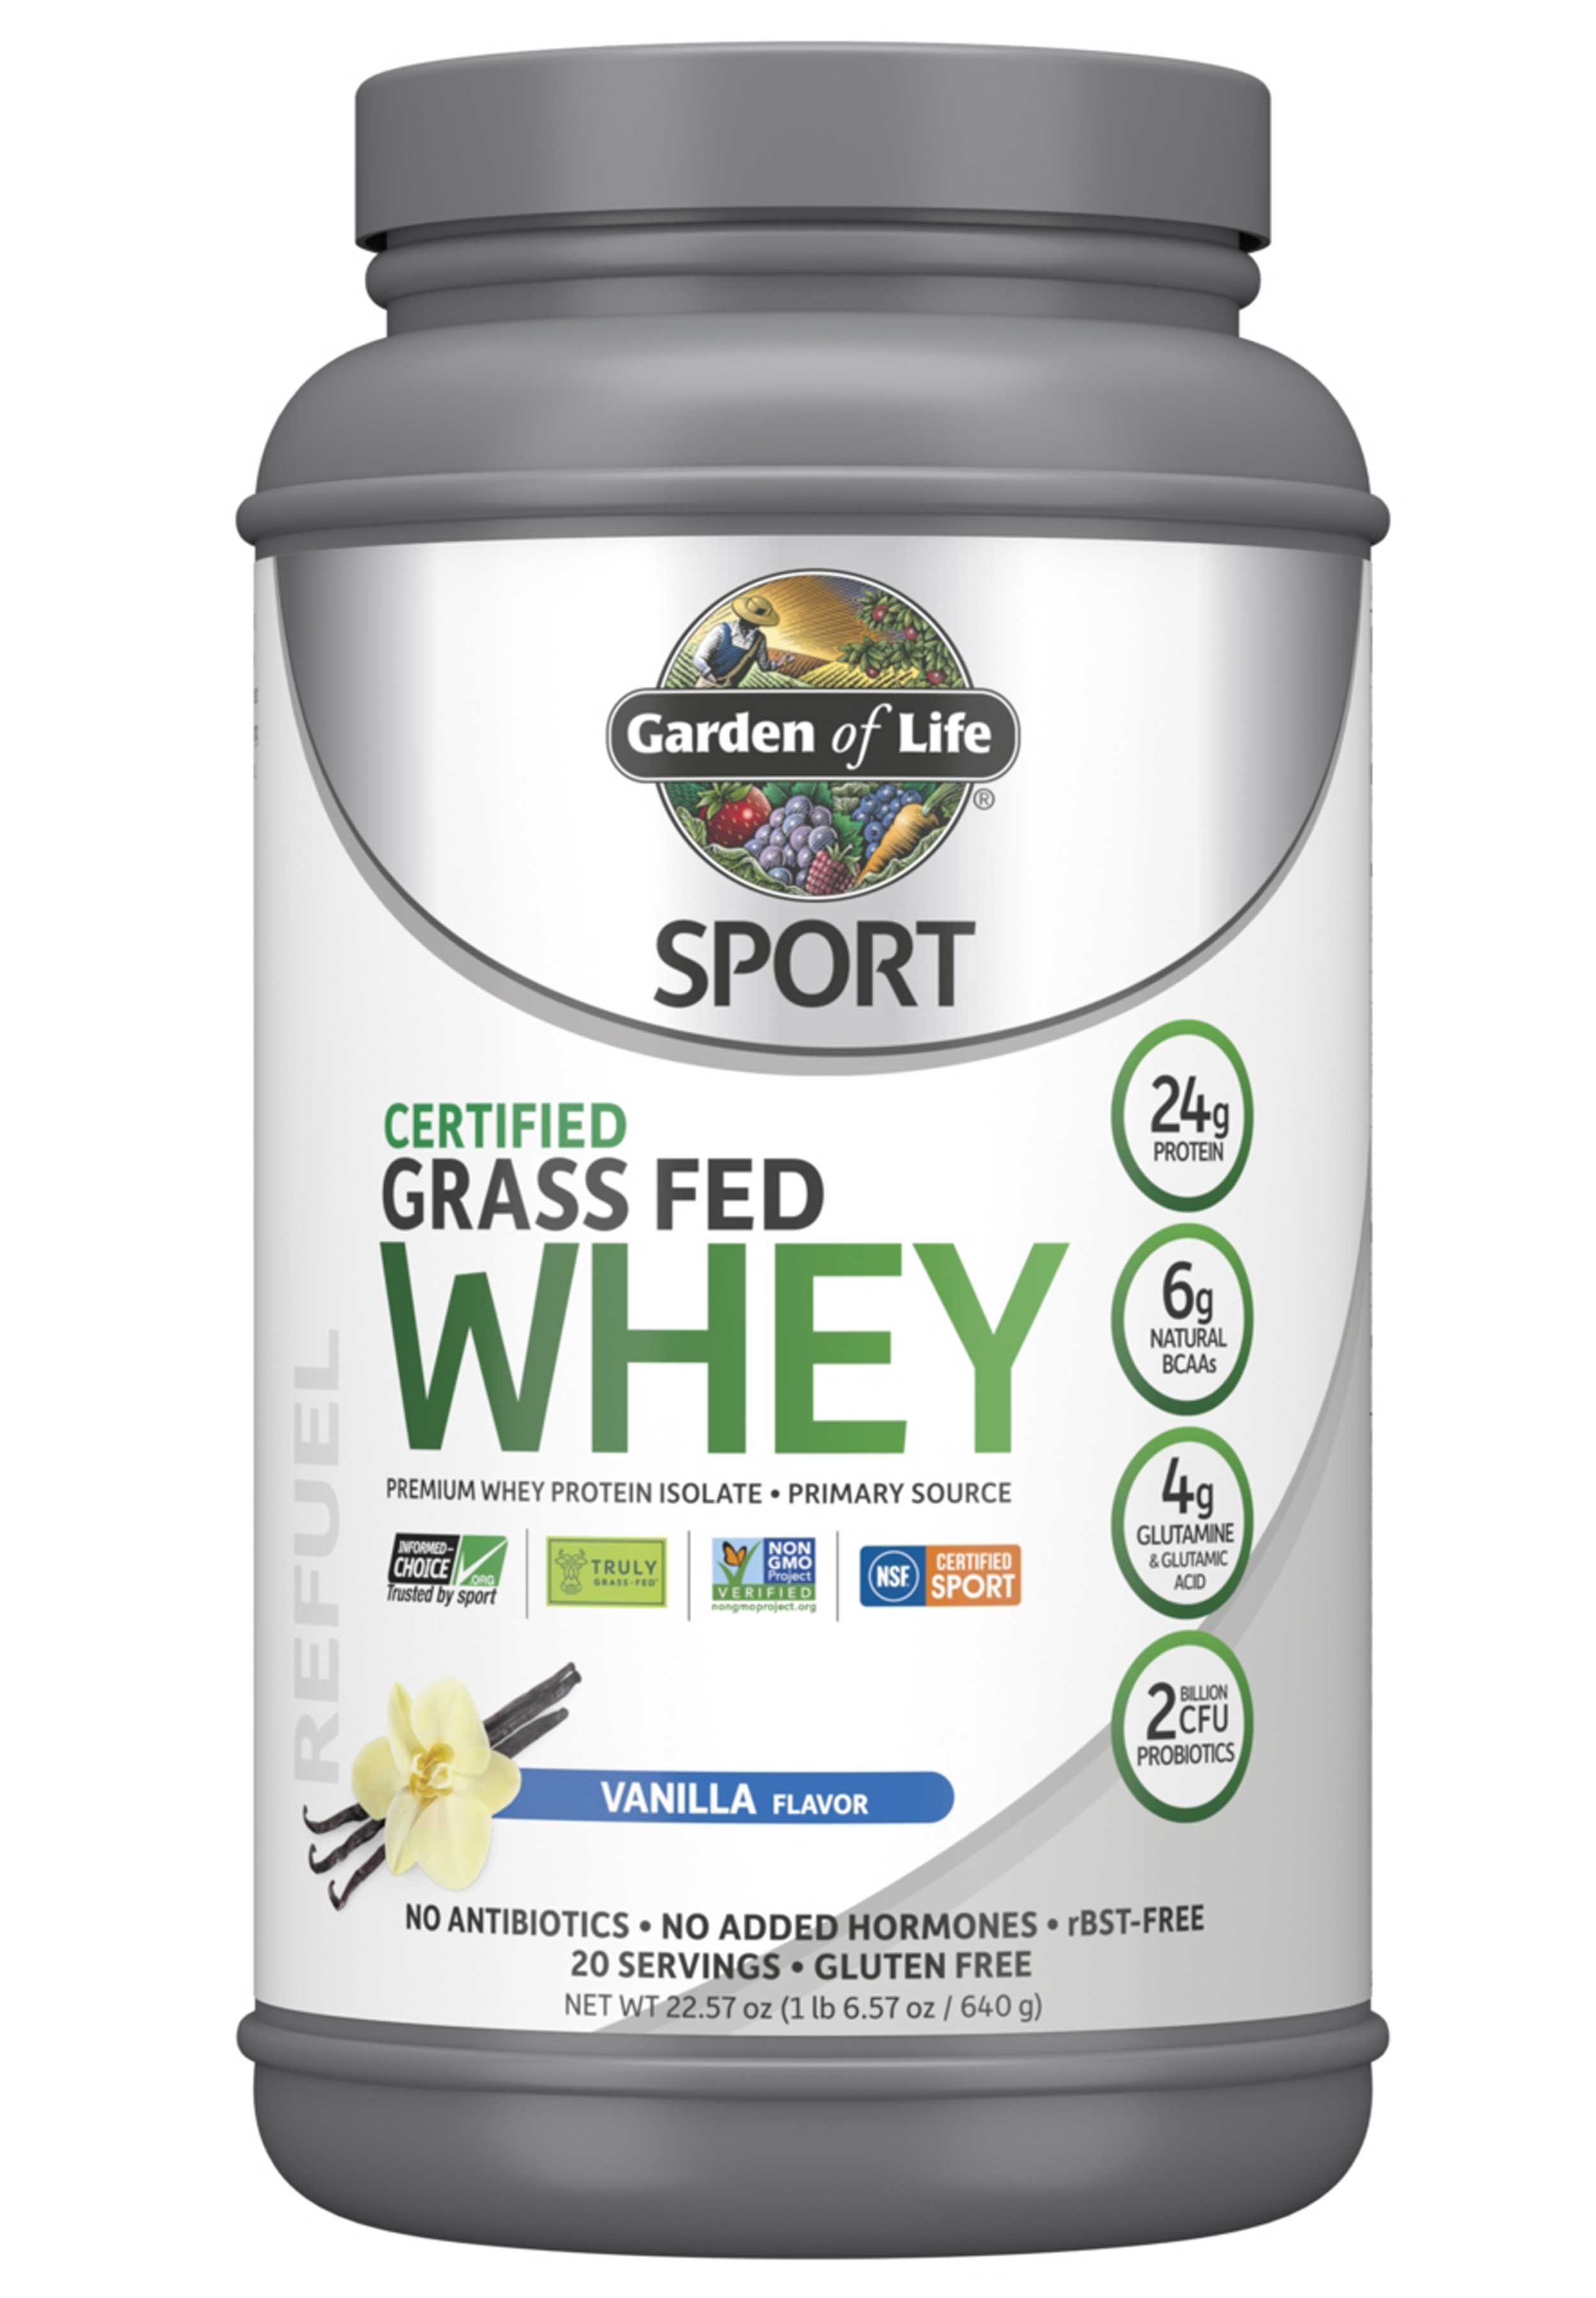 Garden of Life SPORT Certified Grass Fed Whey Protein Powder